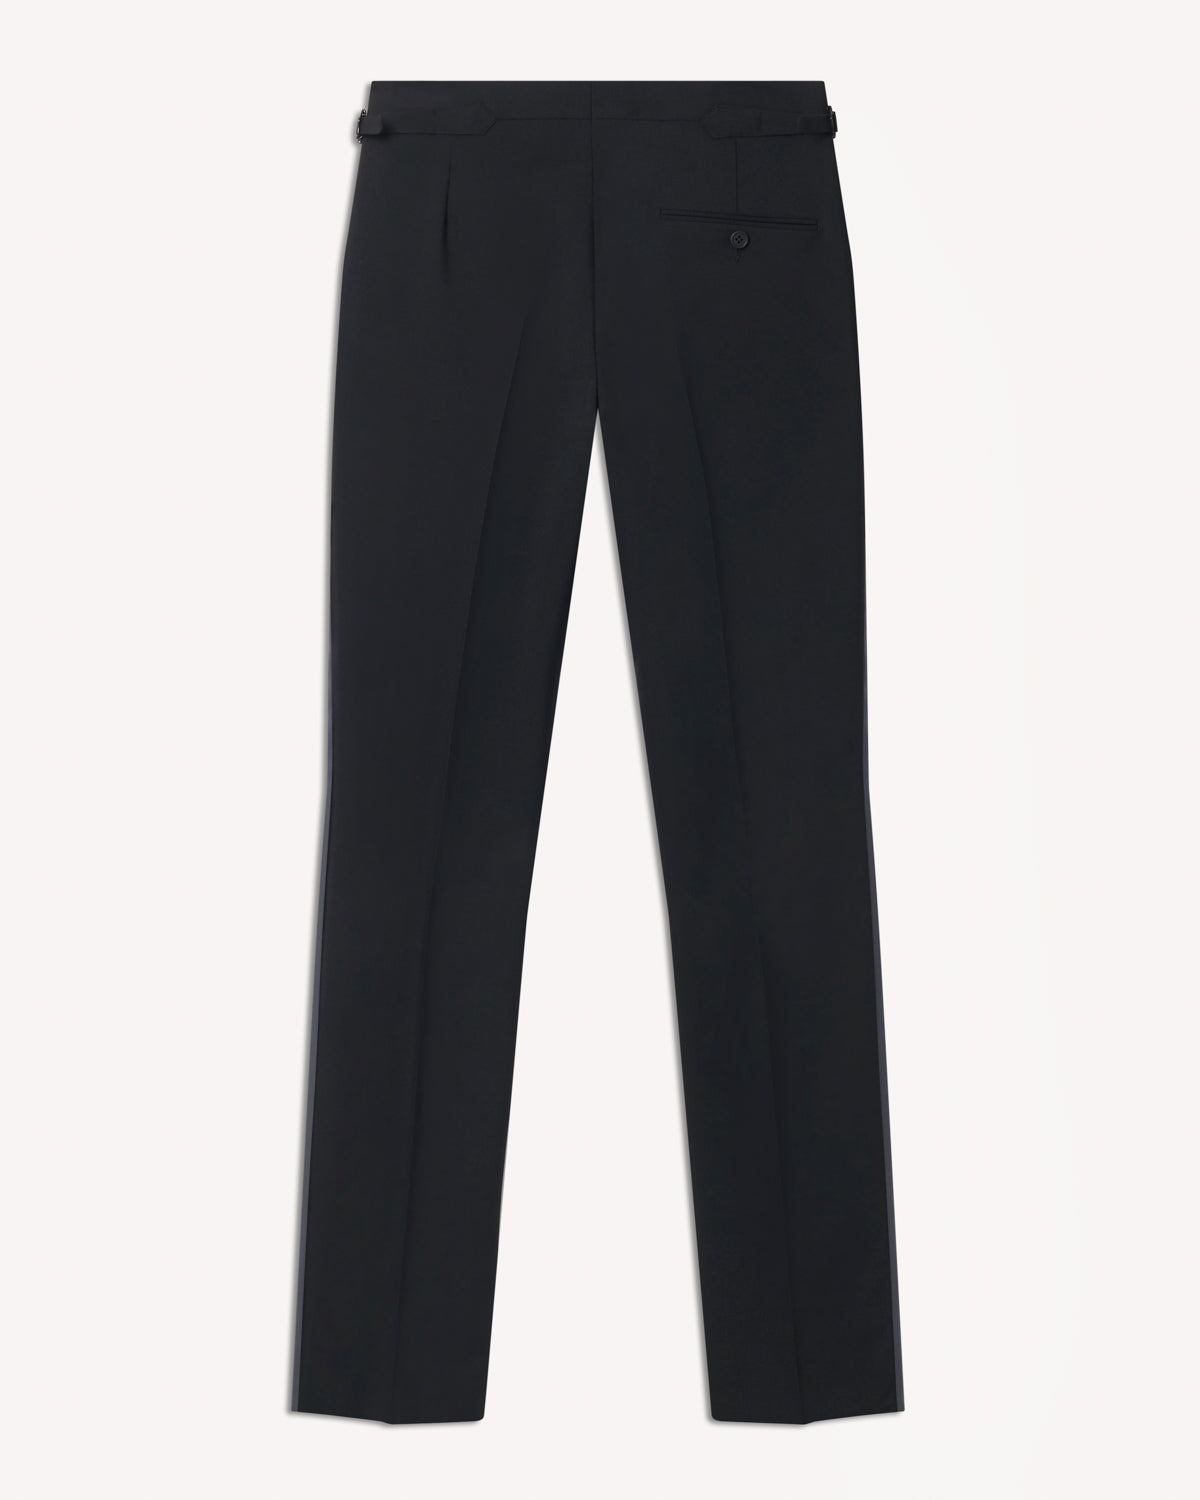 Kilgour Savile Row Tailoring SB1 KG Single Breasted Midnight Dinner Suit